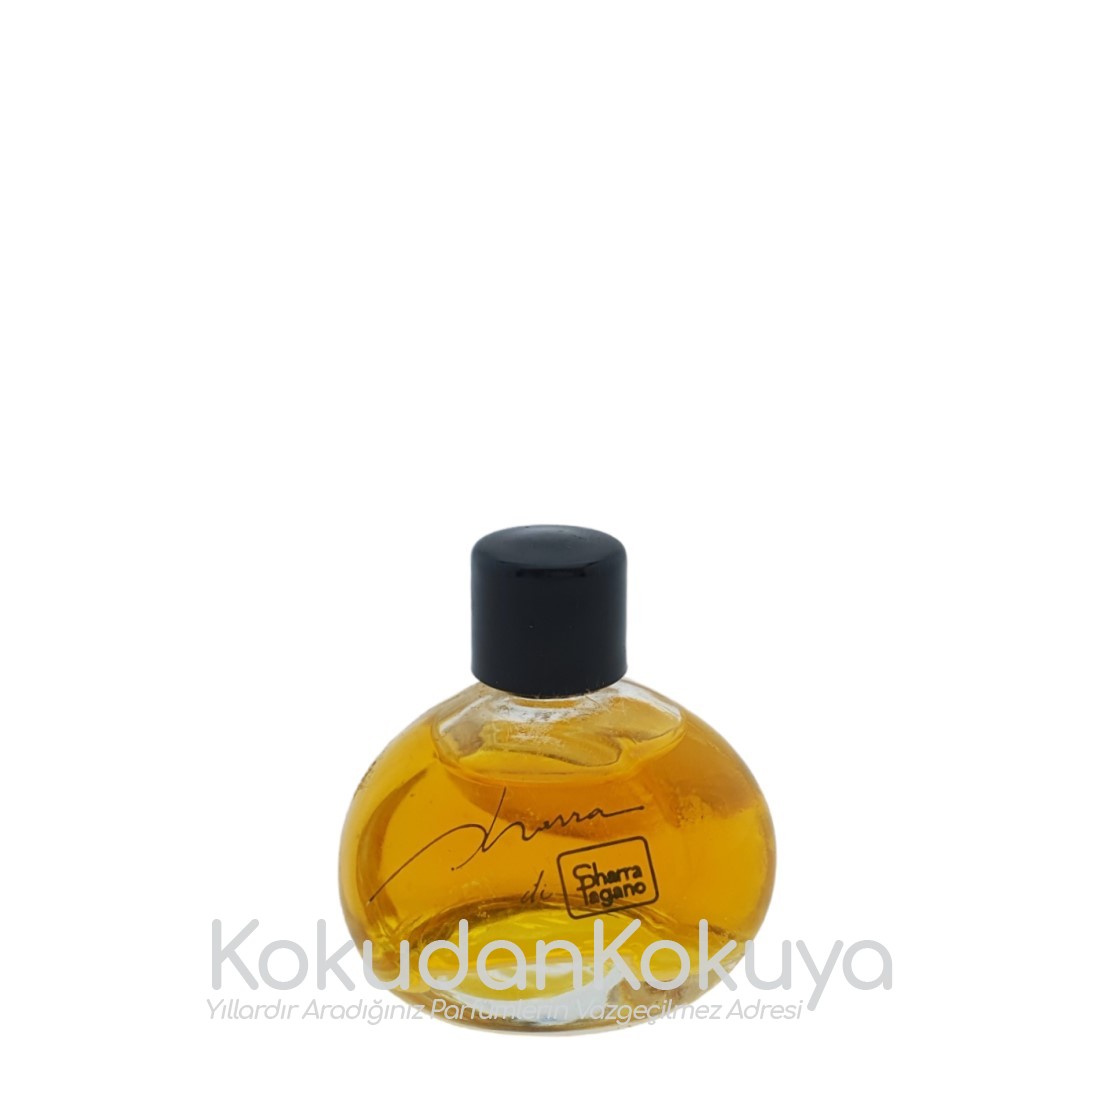 SHARRA LAGANO Sharra (Vintage) Parfüm Kadın 5ml Minyatür (Mini Perfume) Dökme 